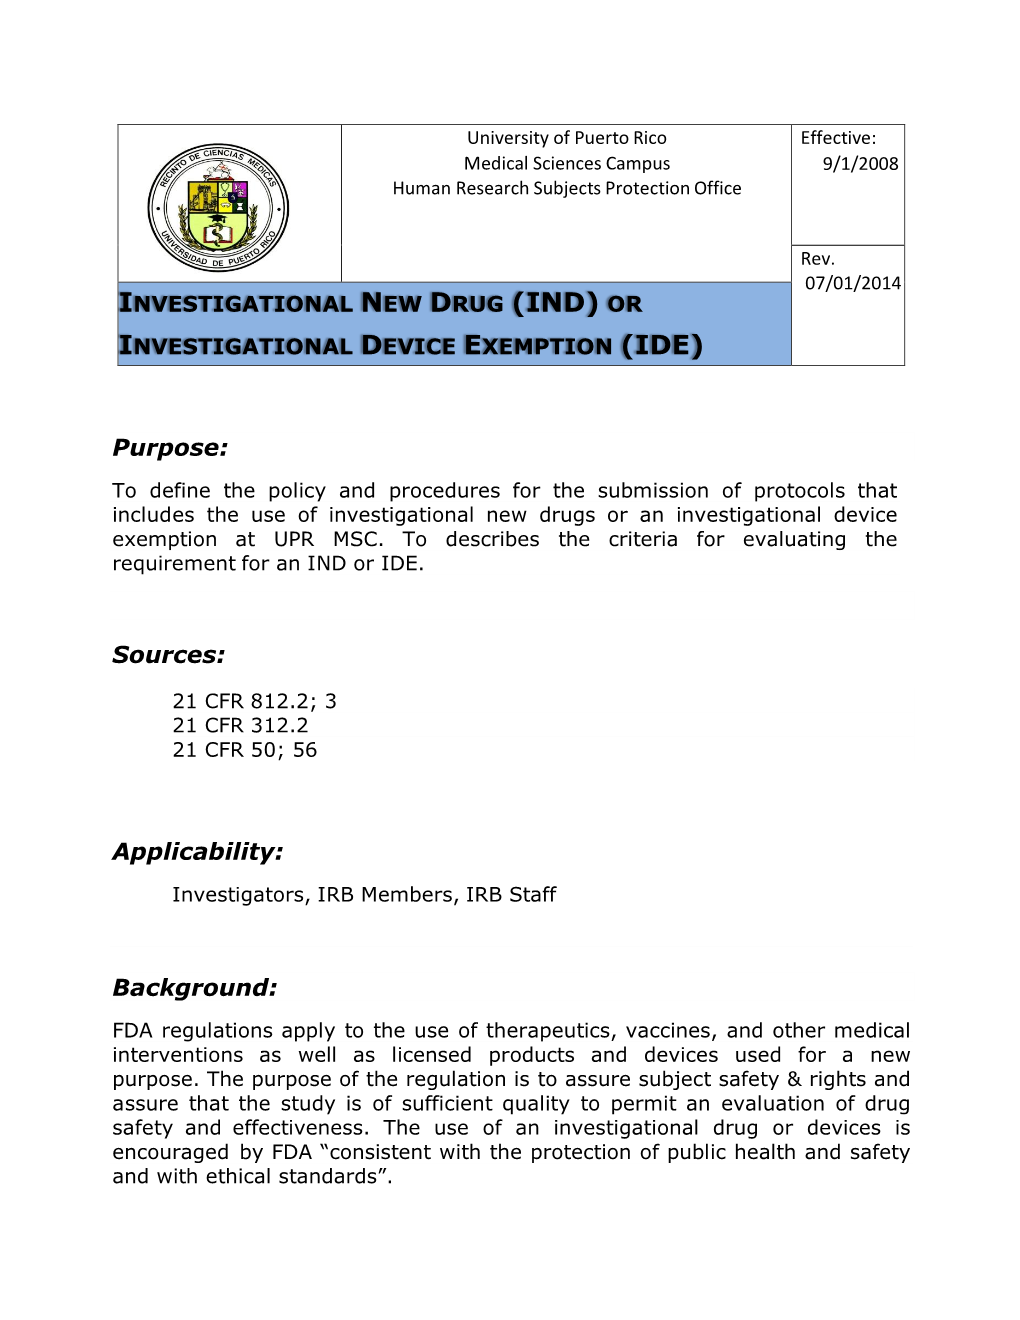 Ind) Or Investigational Device Exemption (Ide